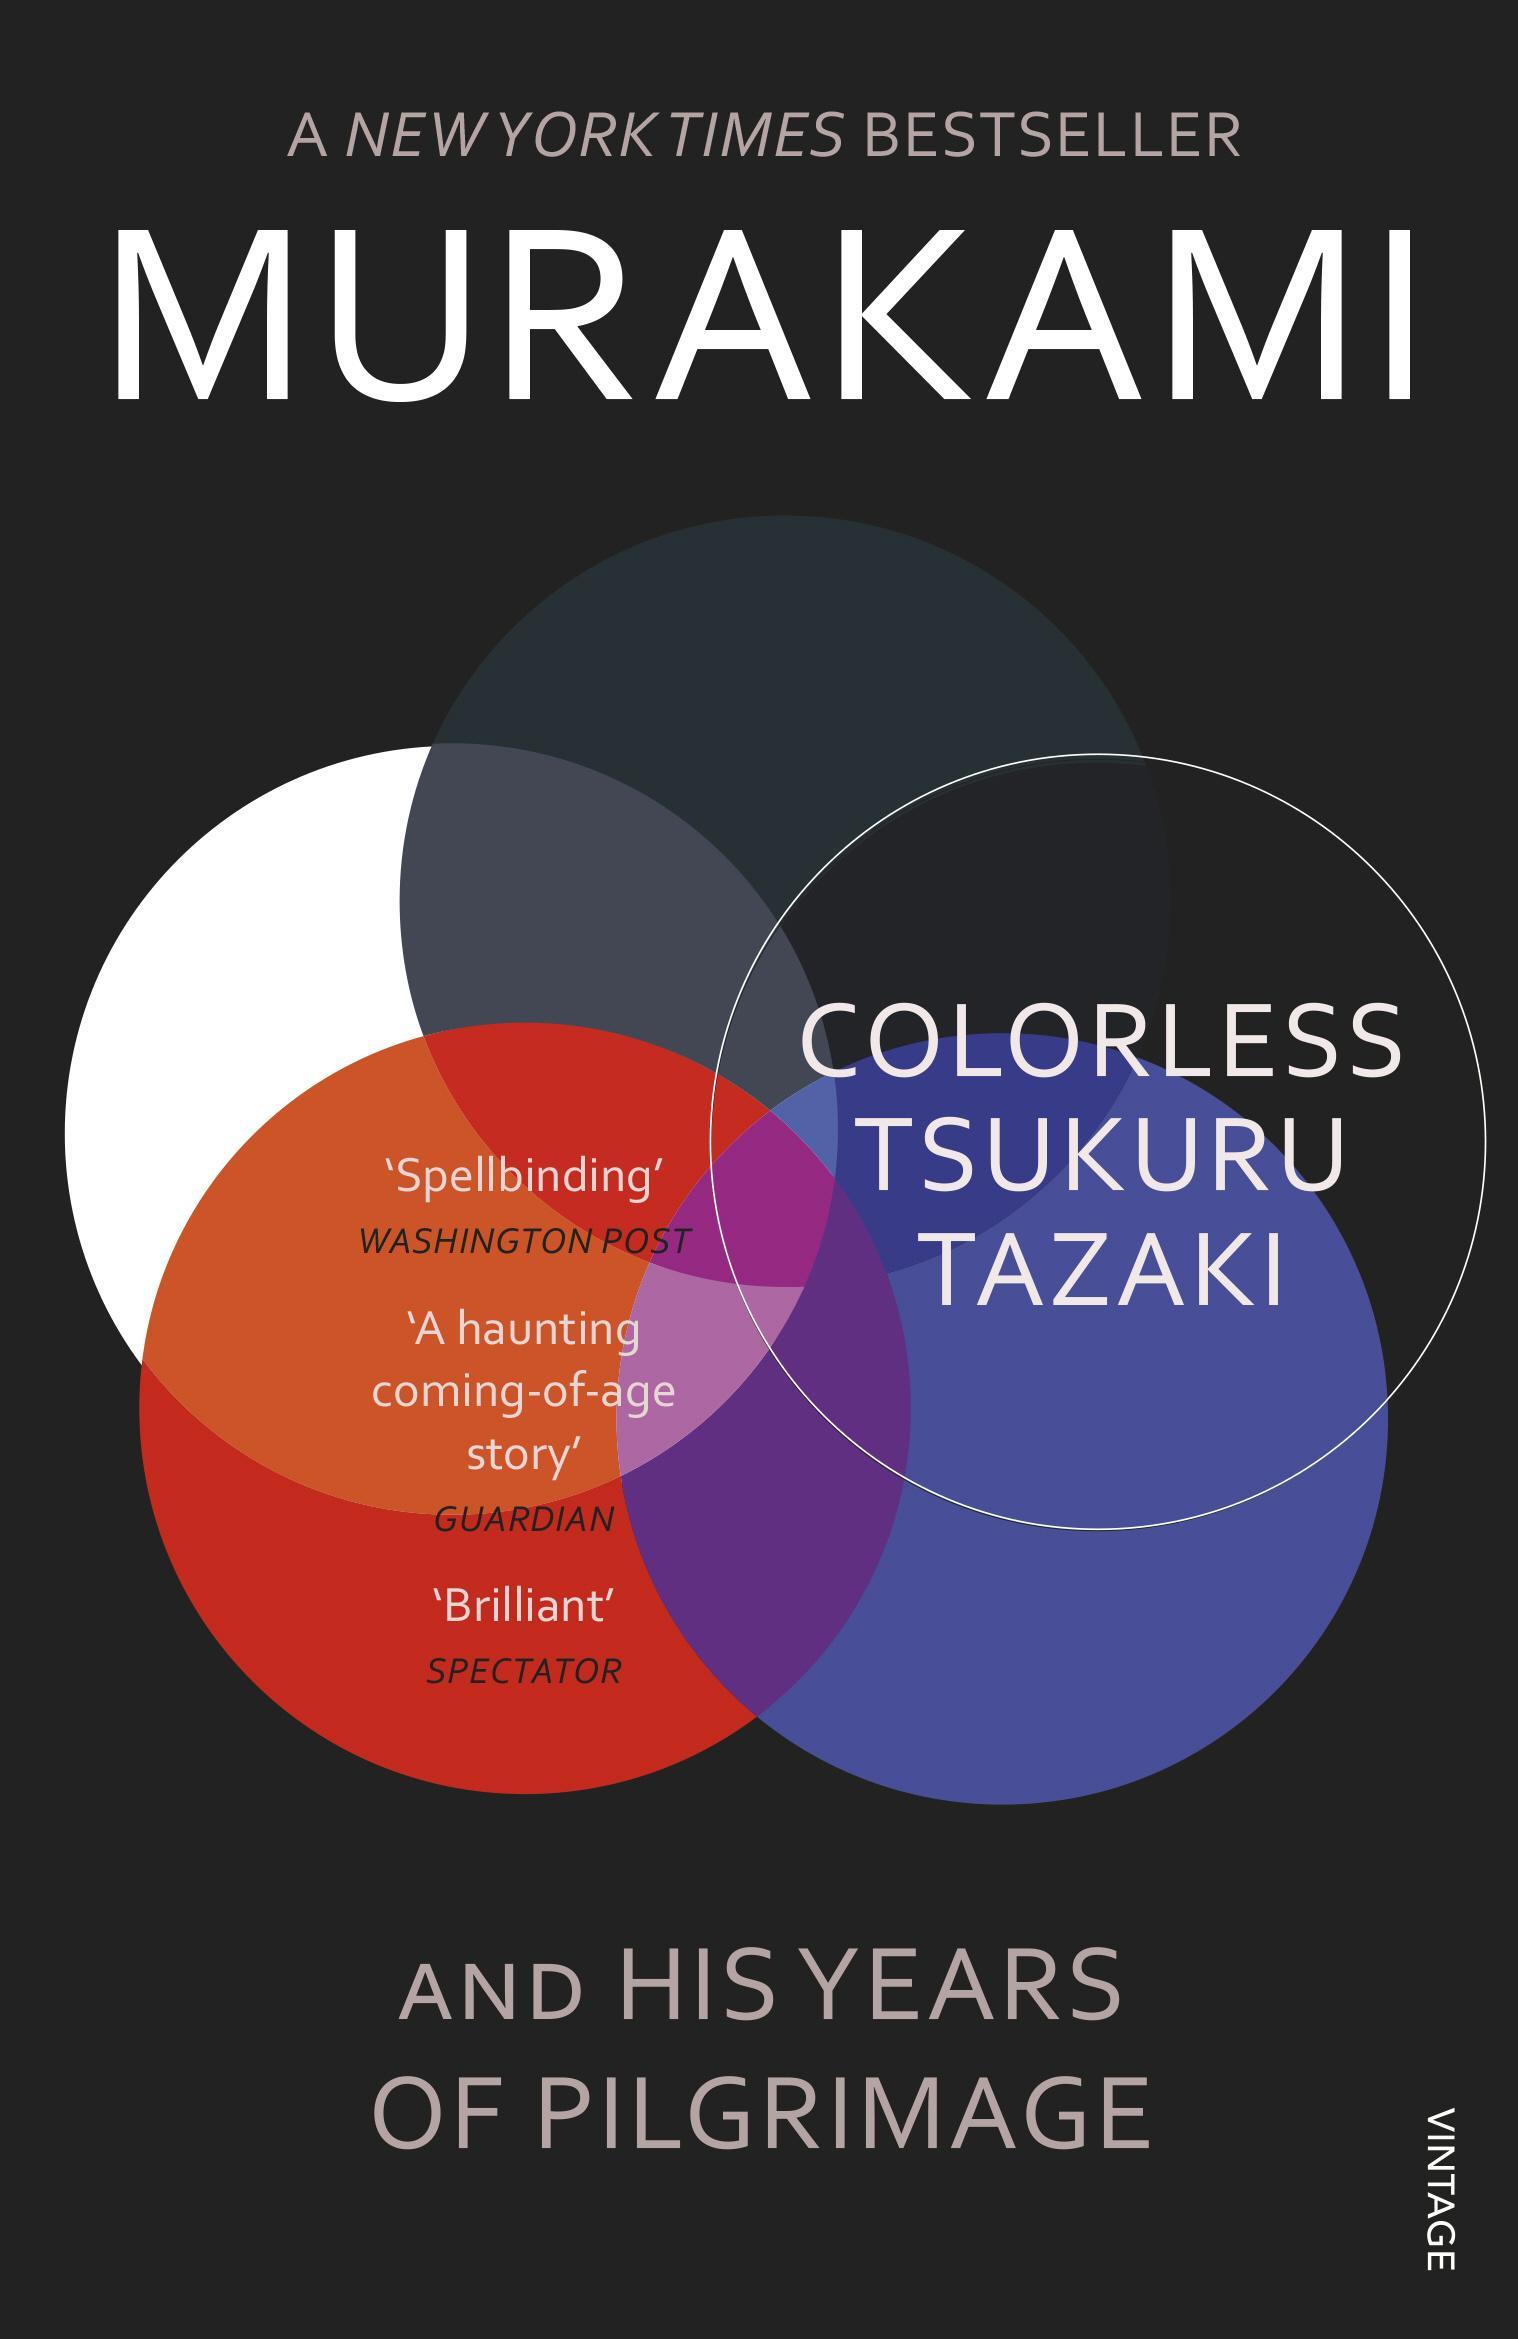 murakami colorless tsukuru tazaki review